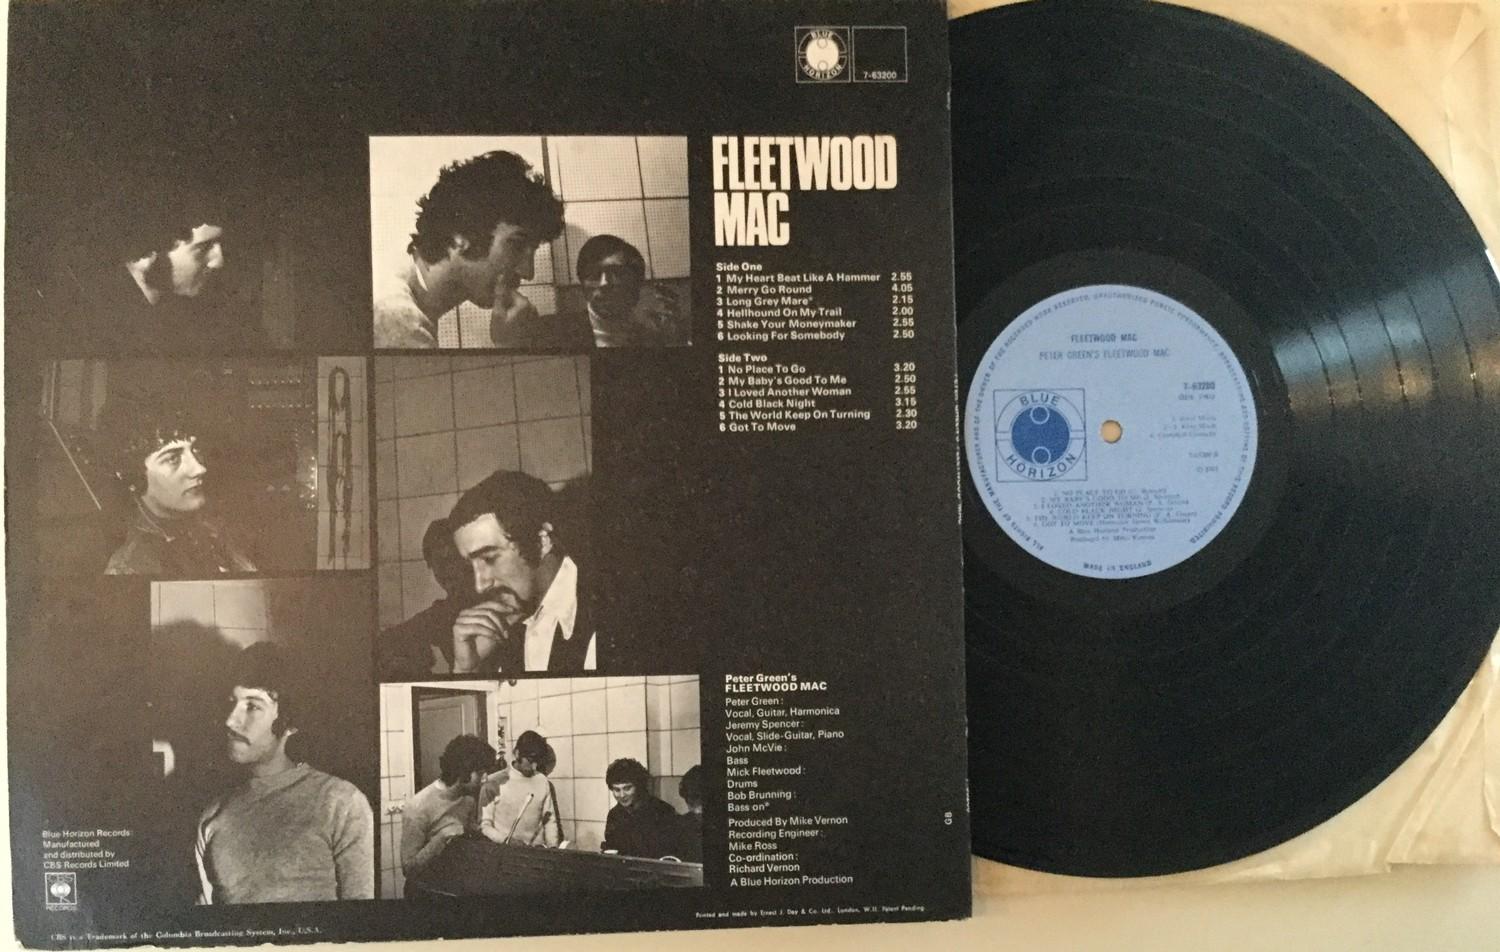 FLEETWOOD MAC - PETER GREEN'S FLETWOOD MAC - LP RECORD. Original 1968 mono Blue Horizon 7-63200 UK - Image 2 of 2